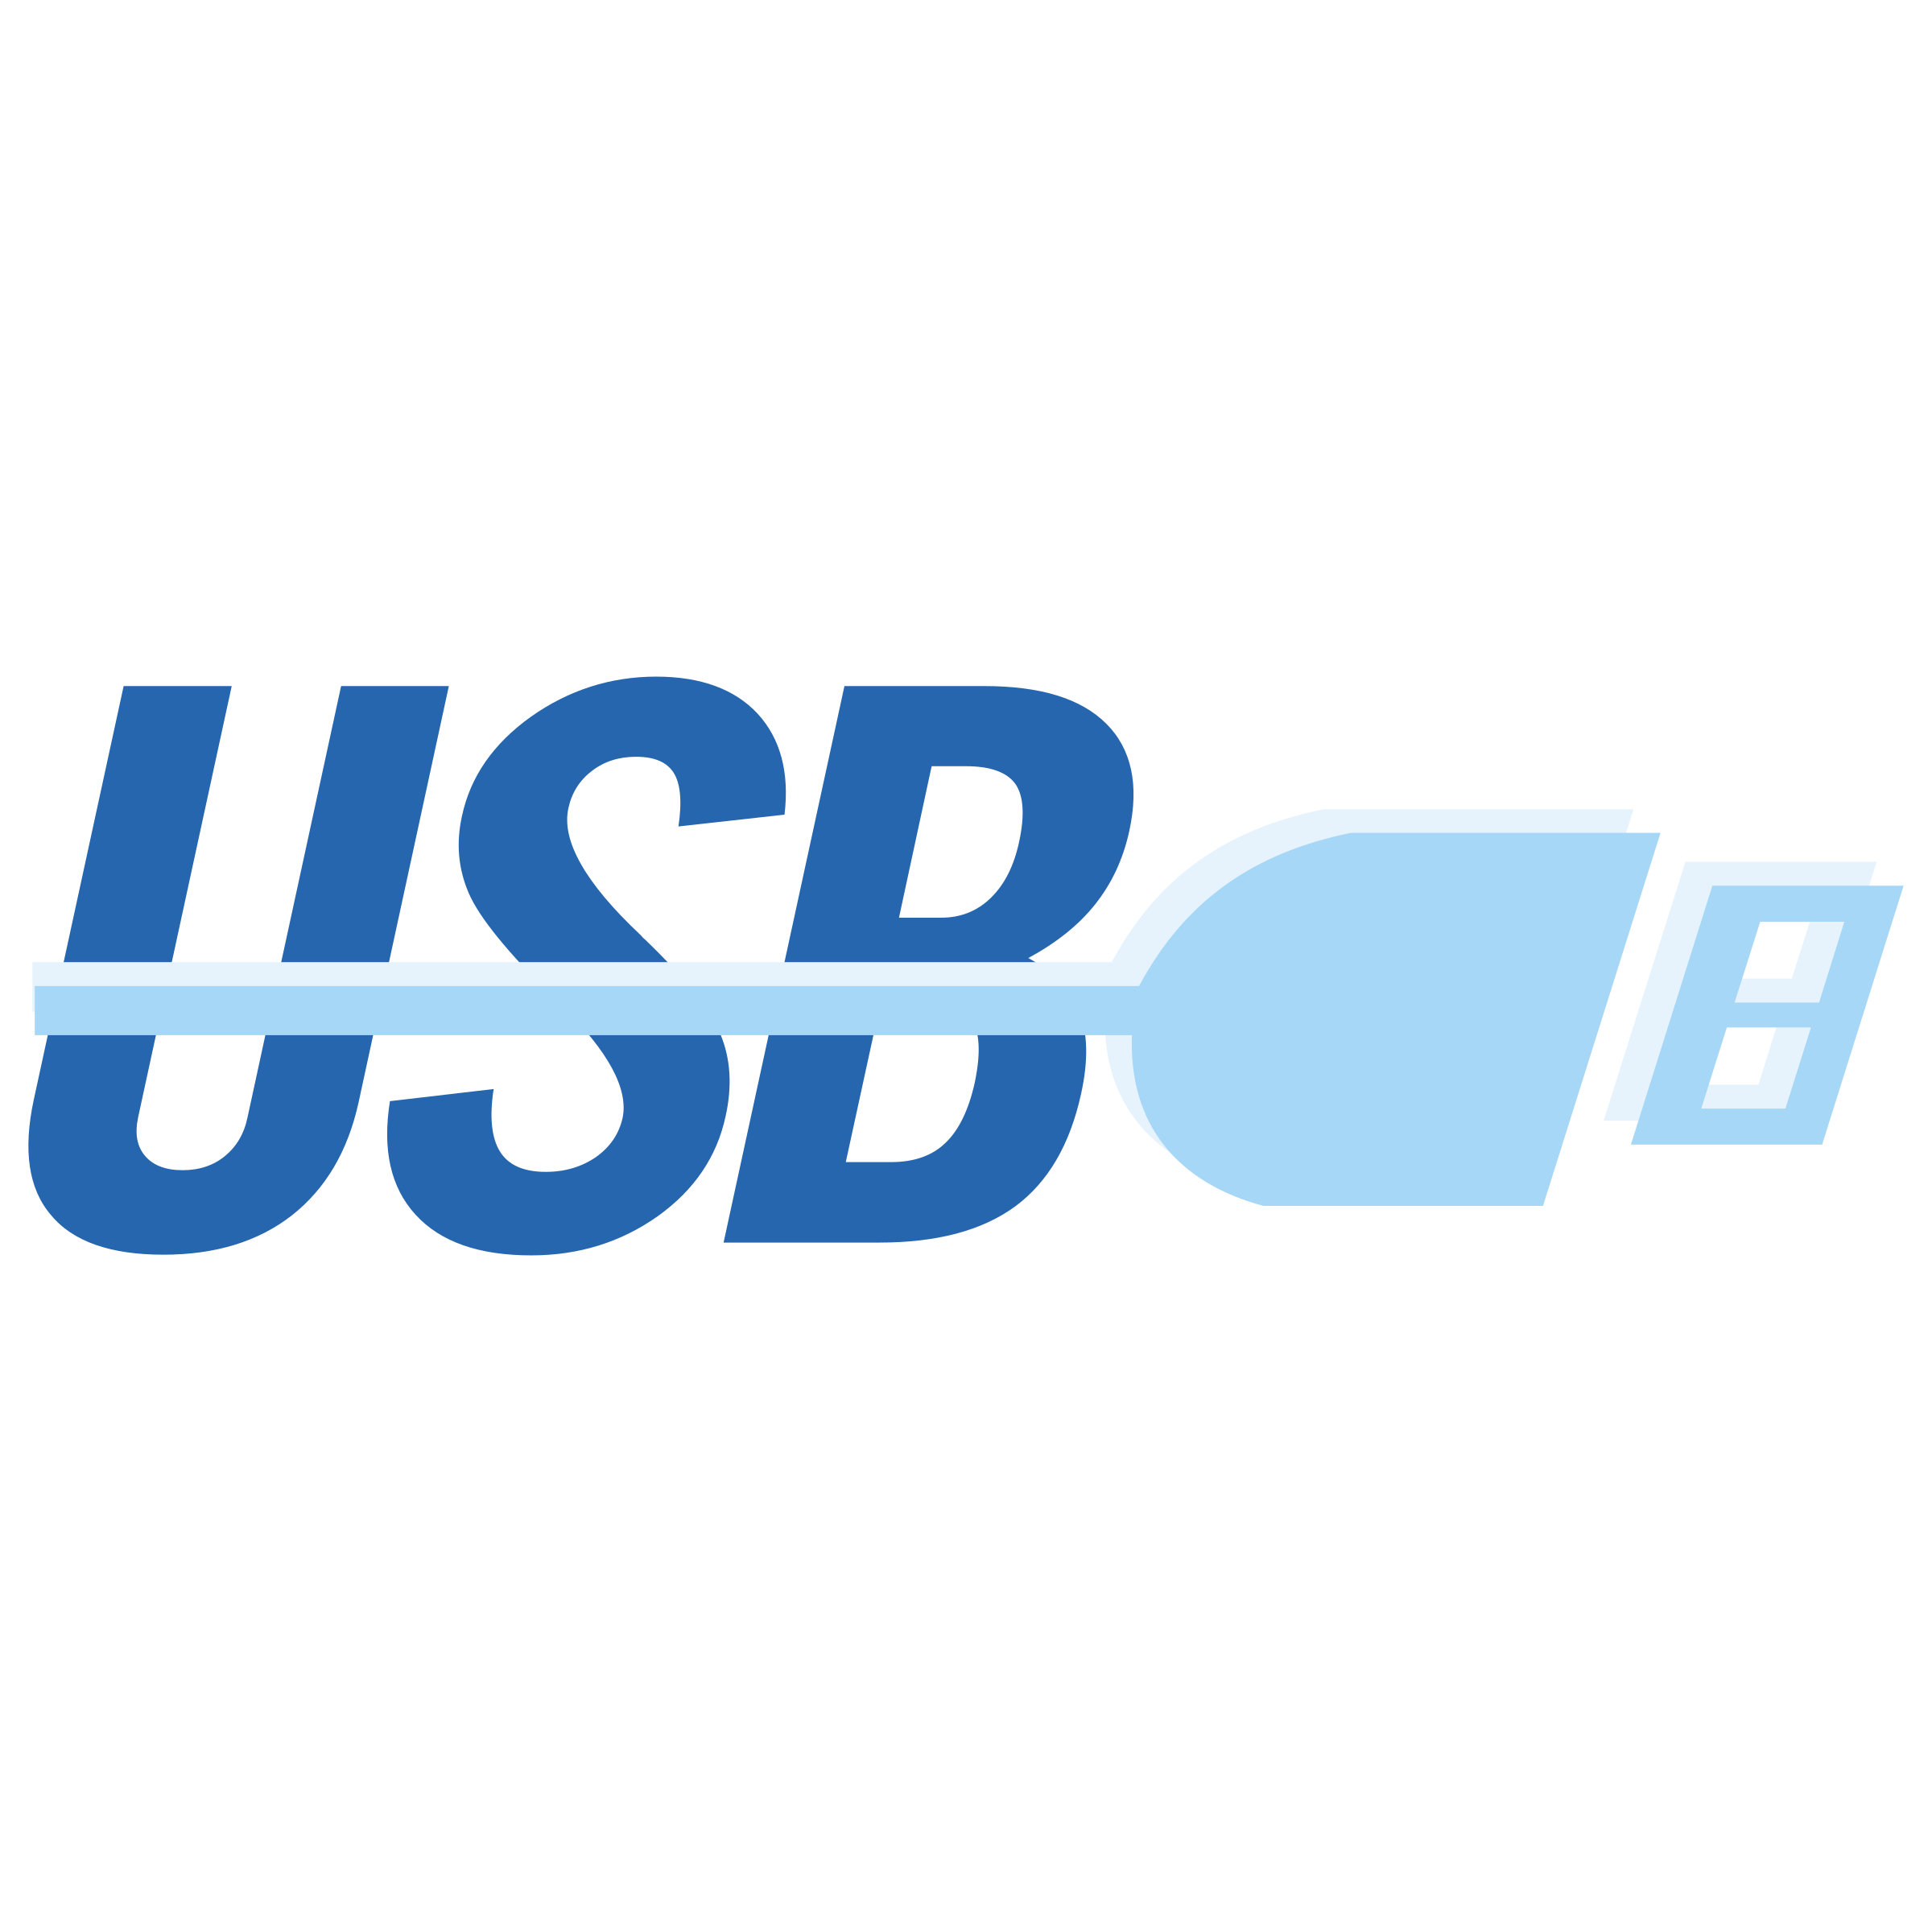 USB Logo - USB Logo PNG Transparent & SVG Vector - Freebie Supply